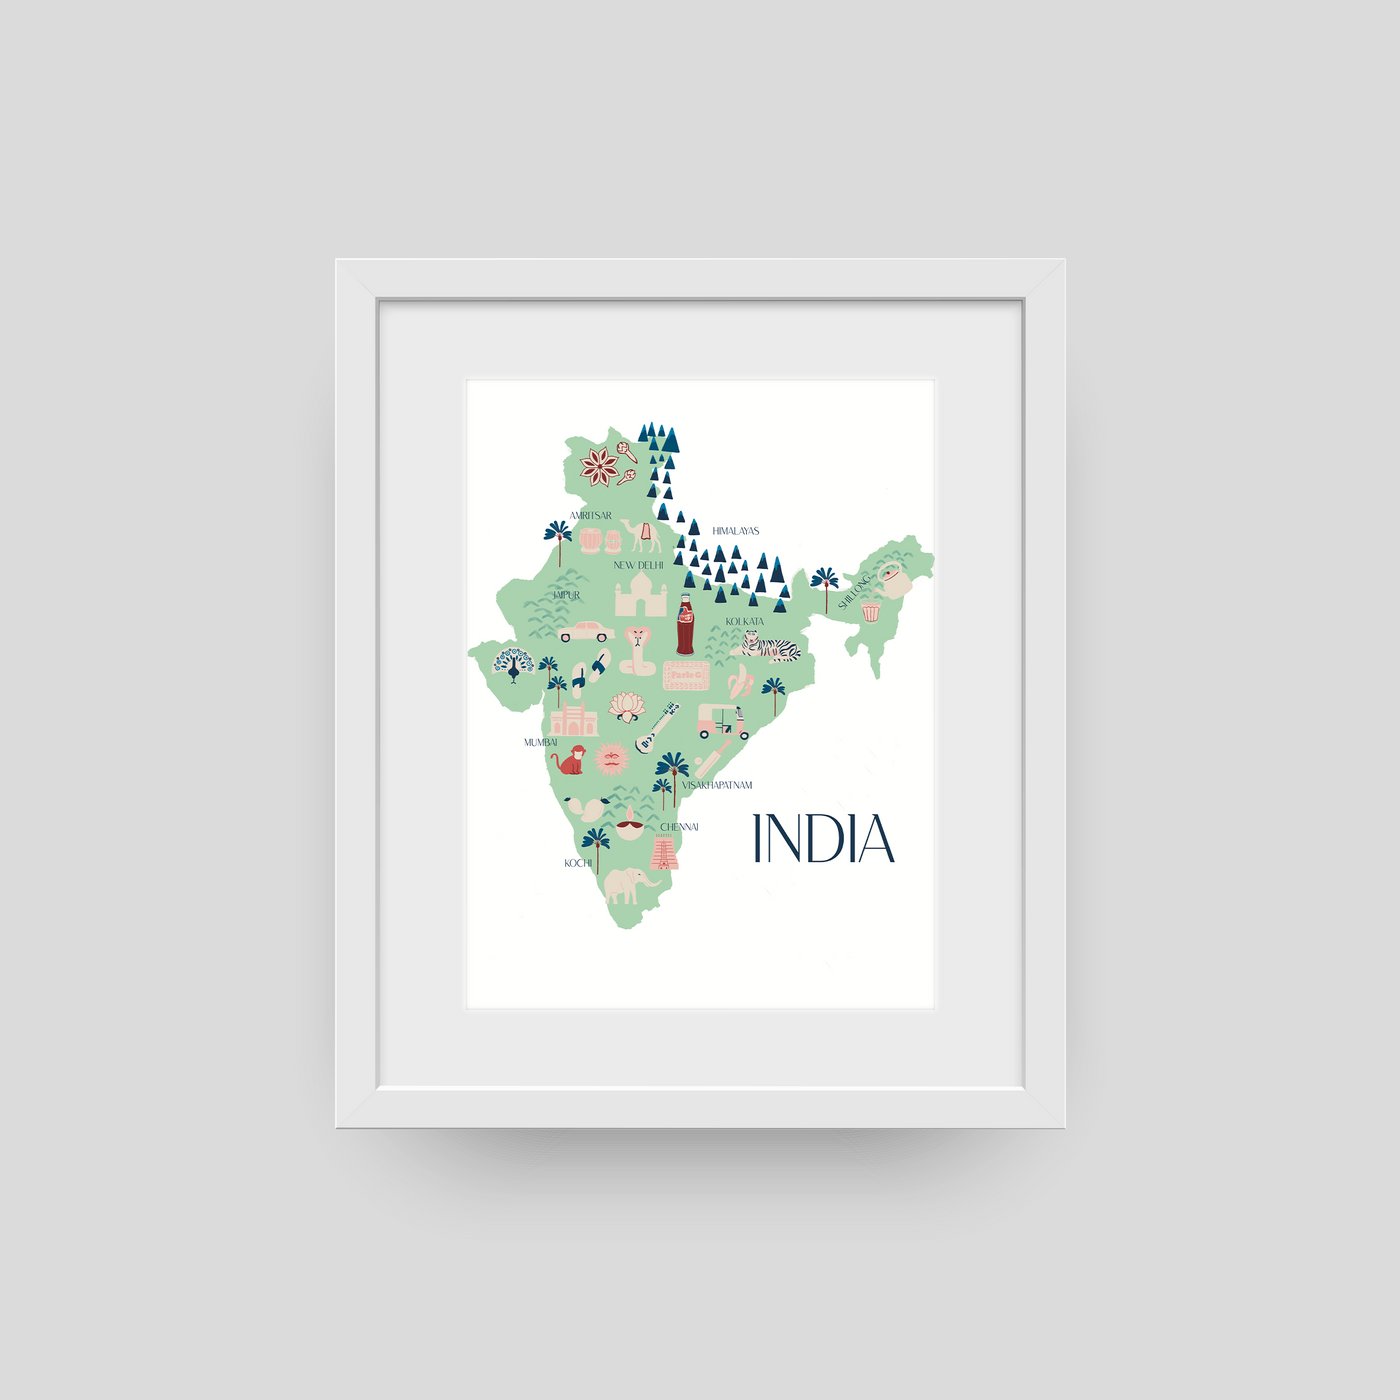 India Illustrated Map by Jatinder Creates 